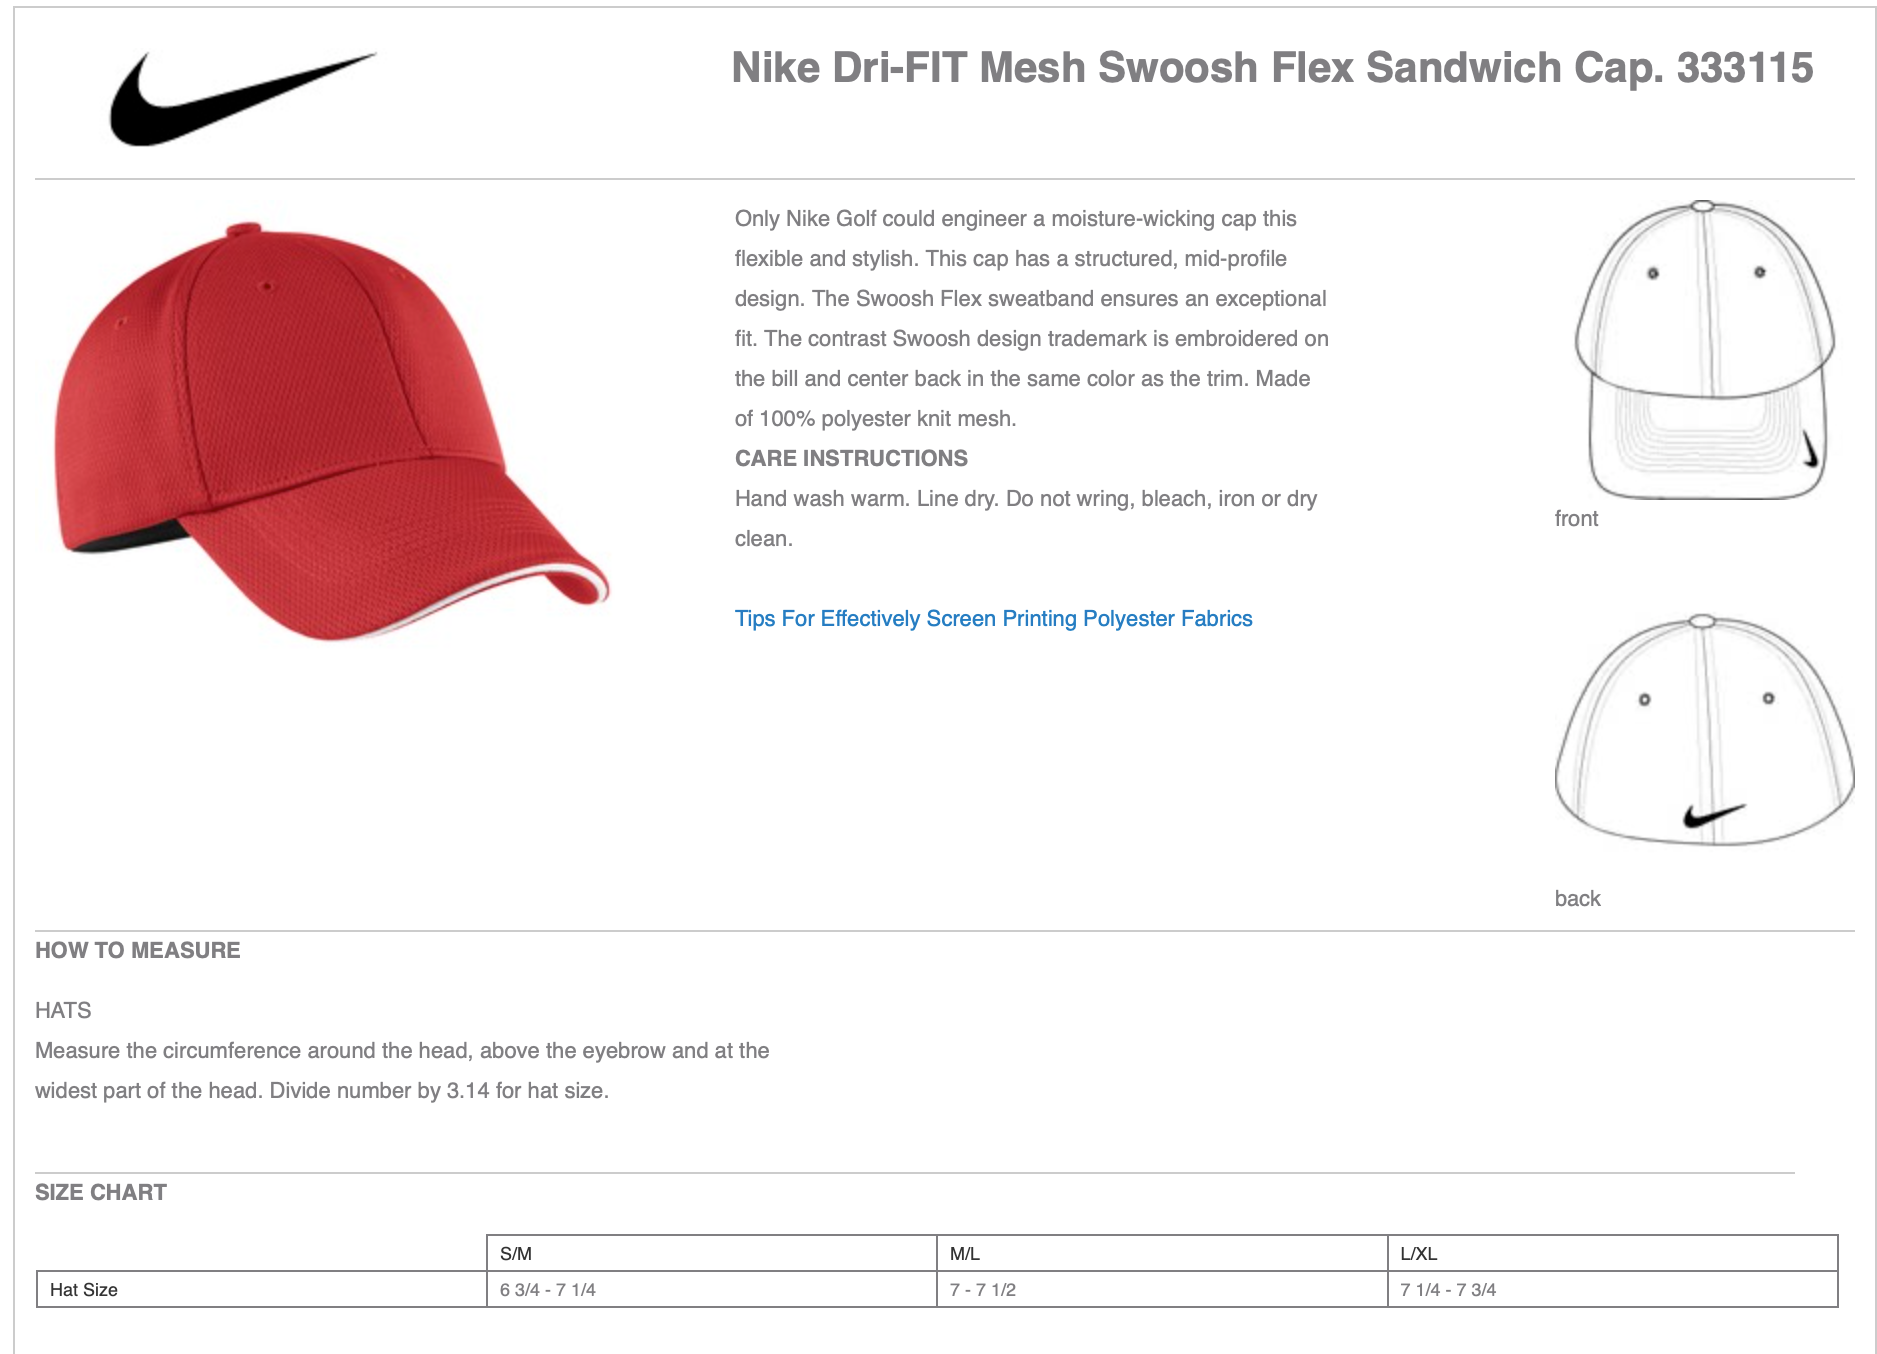 Dri-FIT Mesh Swoosh Flex Sandwich Cap by Nike